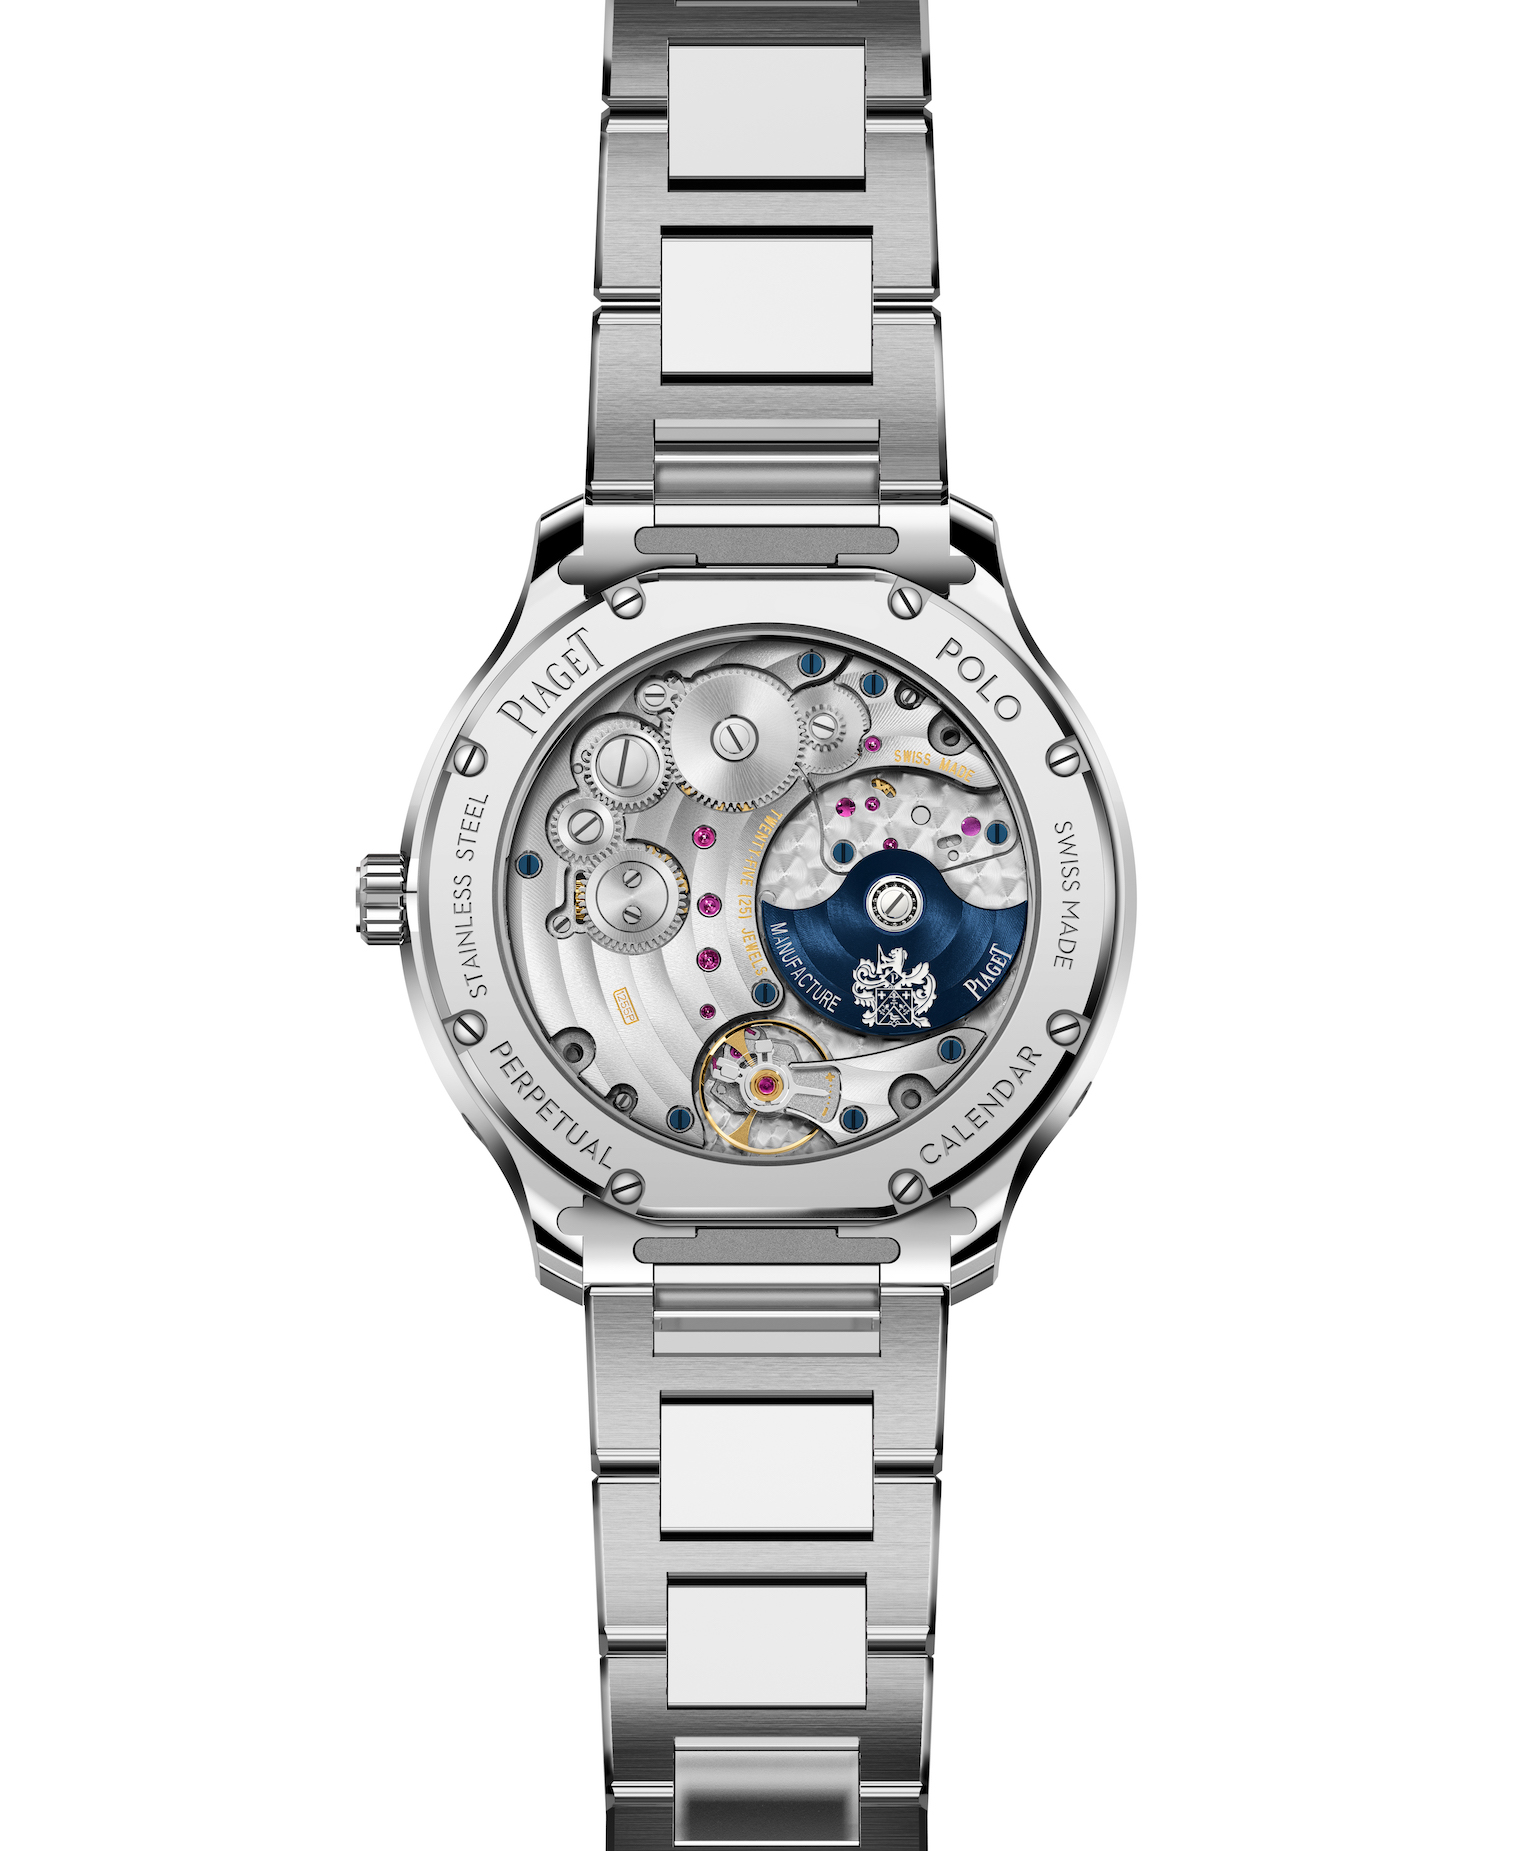 Piaget Polo Perpetual Calendar Ultra-Thin watch.